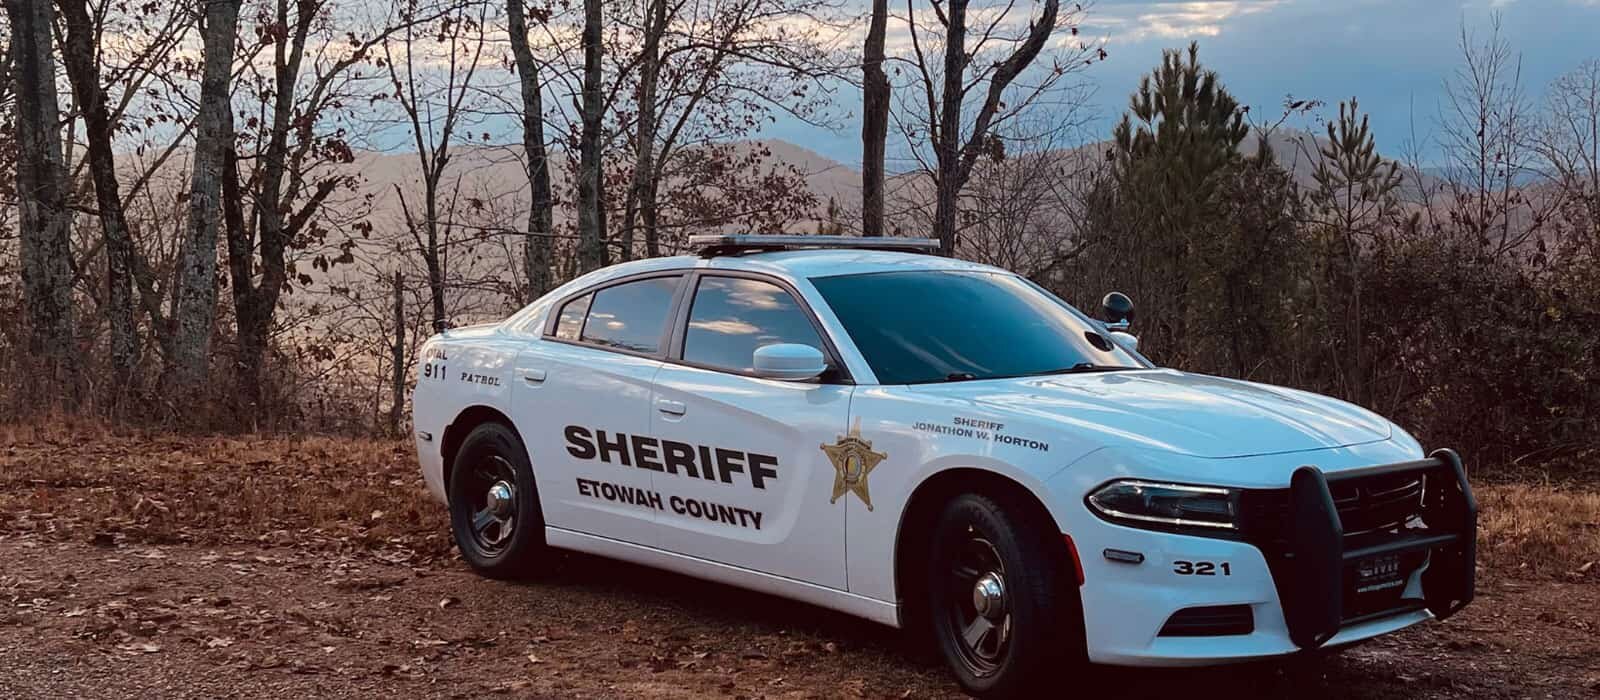 Etowah County Sheriff's Office Patrol Car